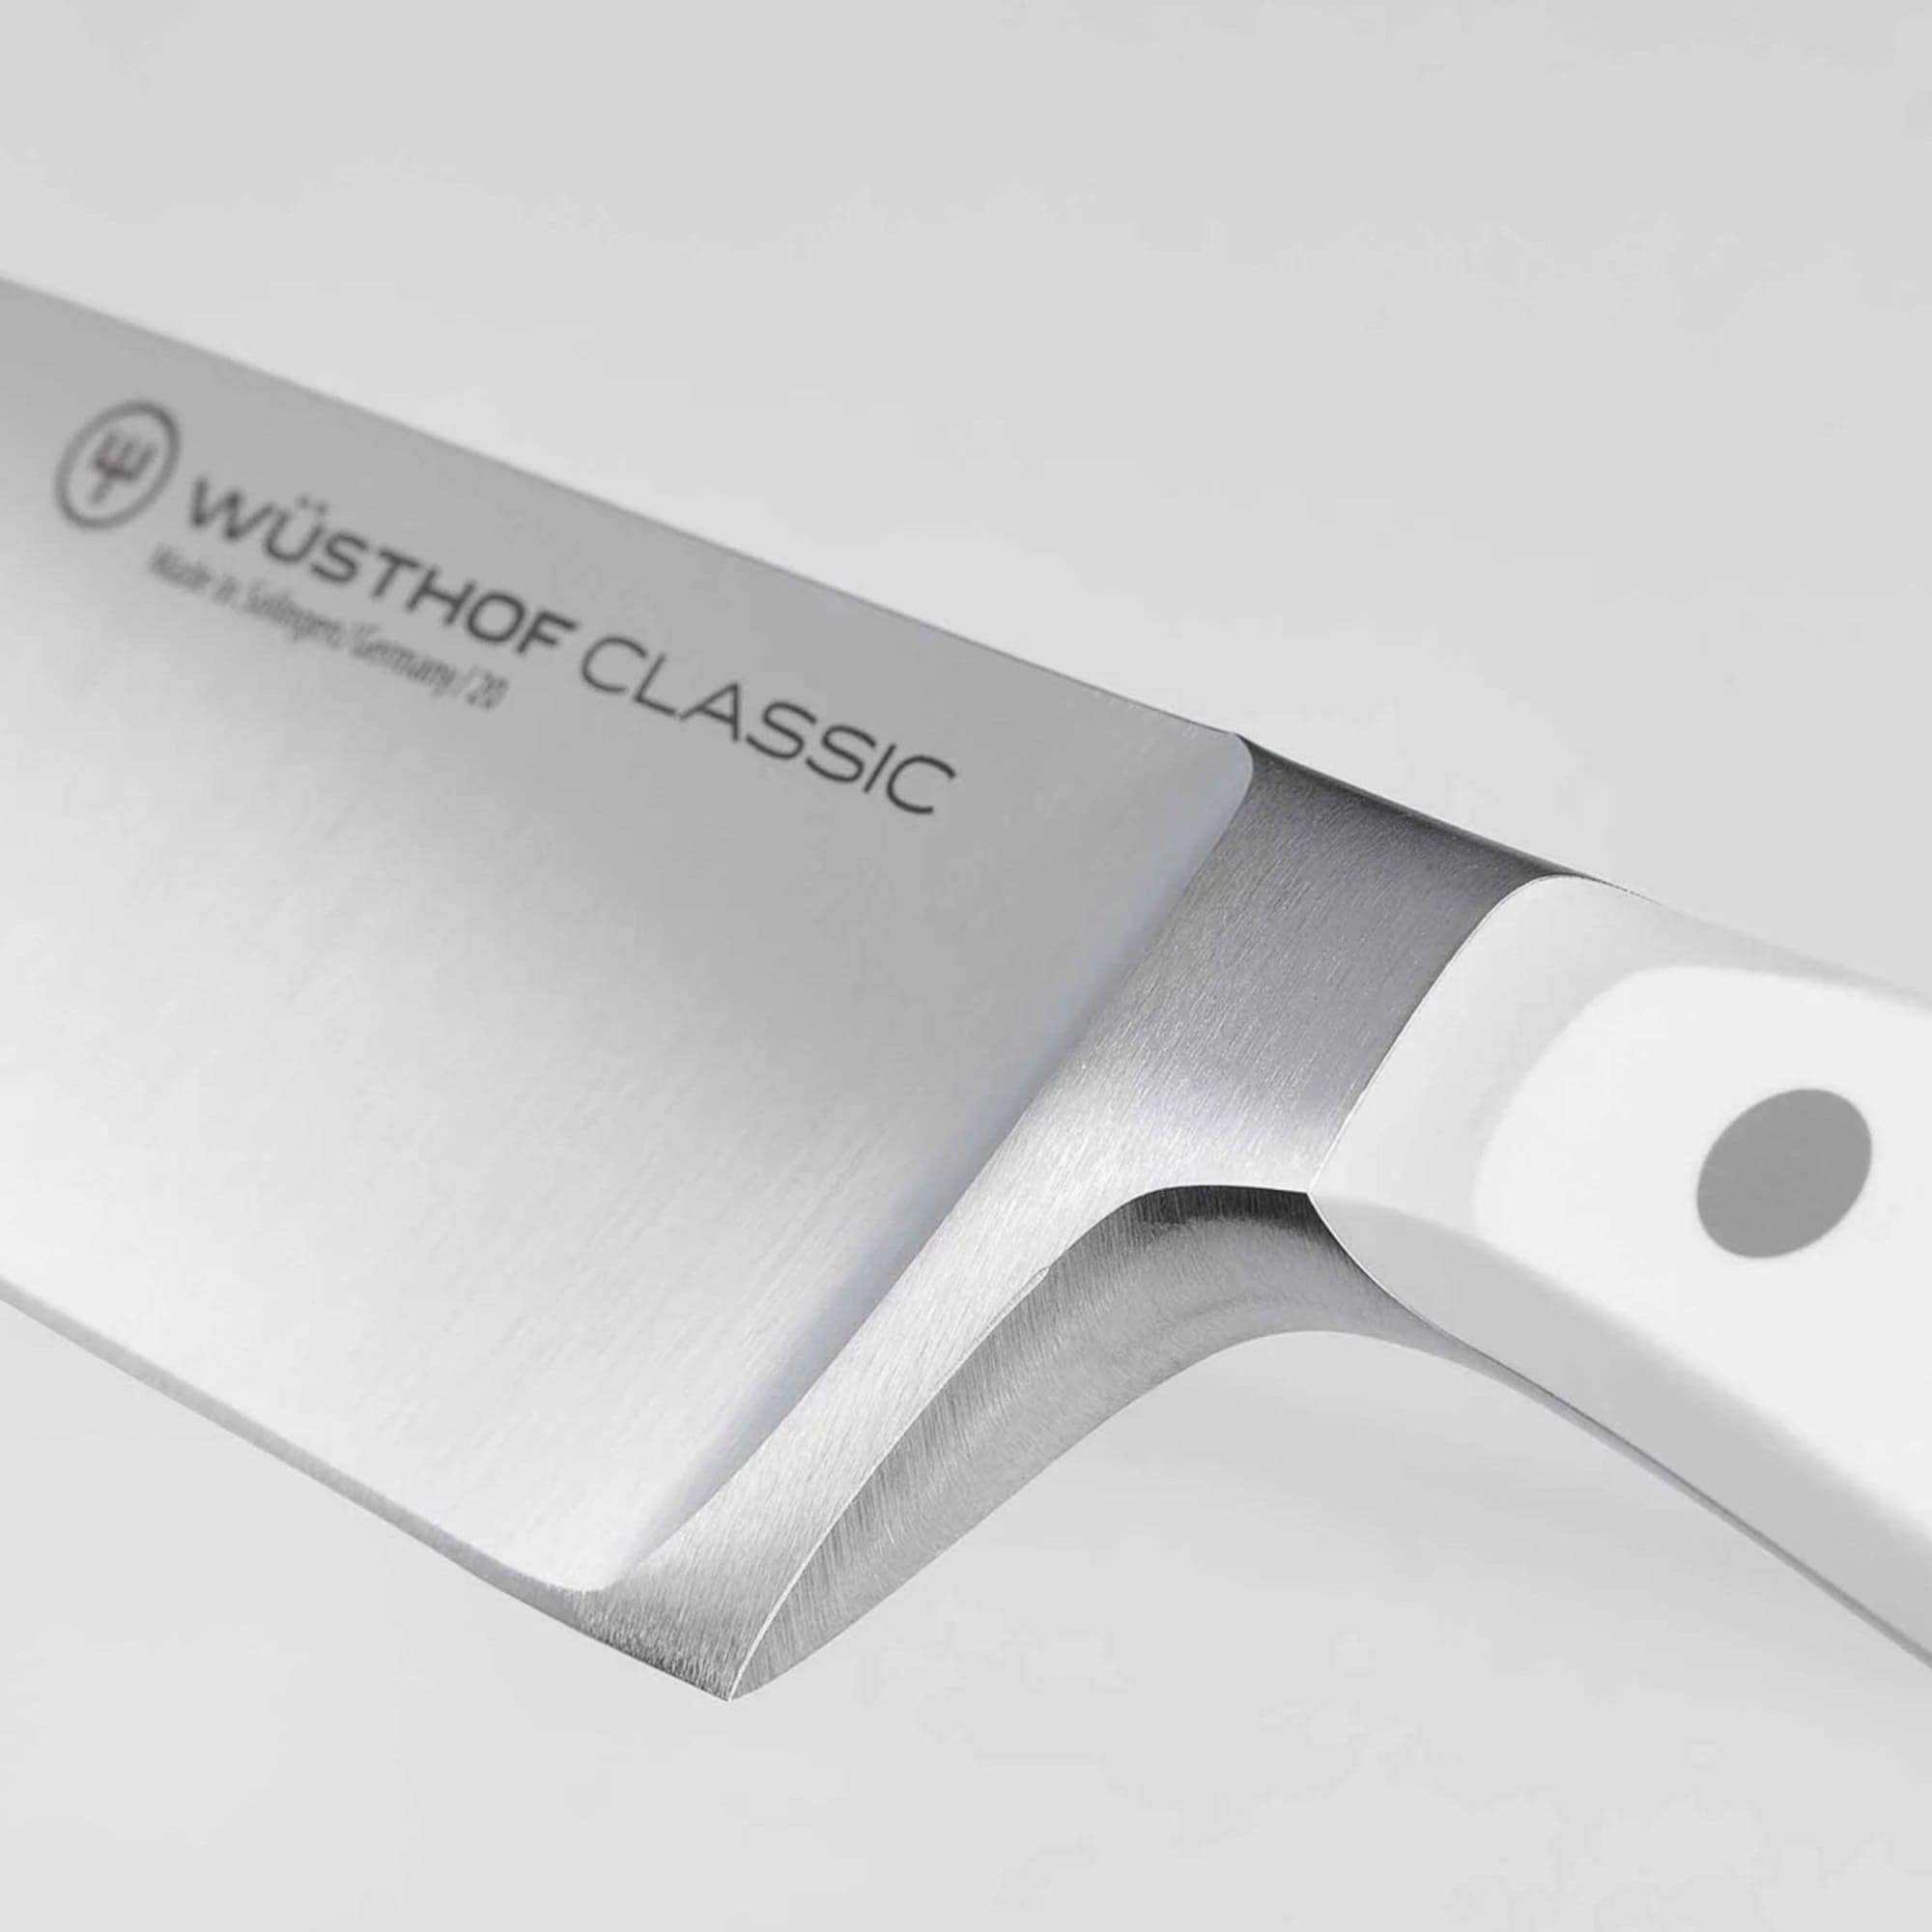 Wusthof Classic White 6pc Design Knife Block Set with Bread Knife Image 5